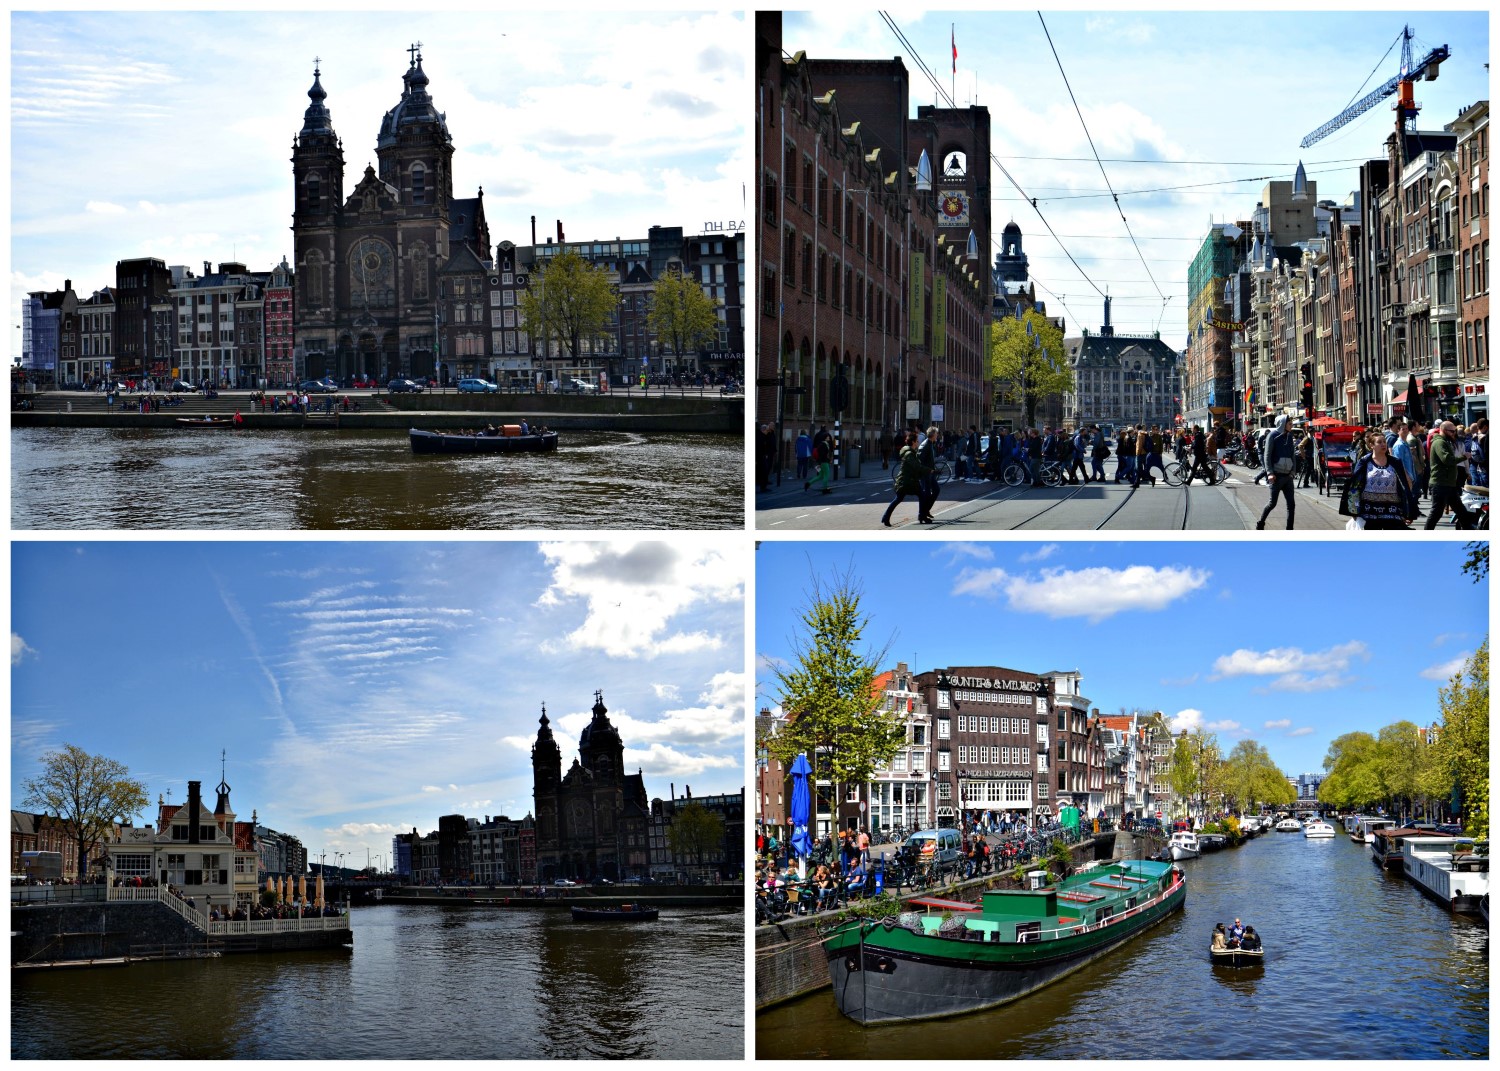 Amsterdam, Holandia - bele kaj, blog podróżniczy po śląsku